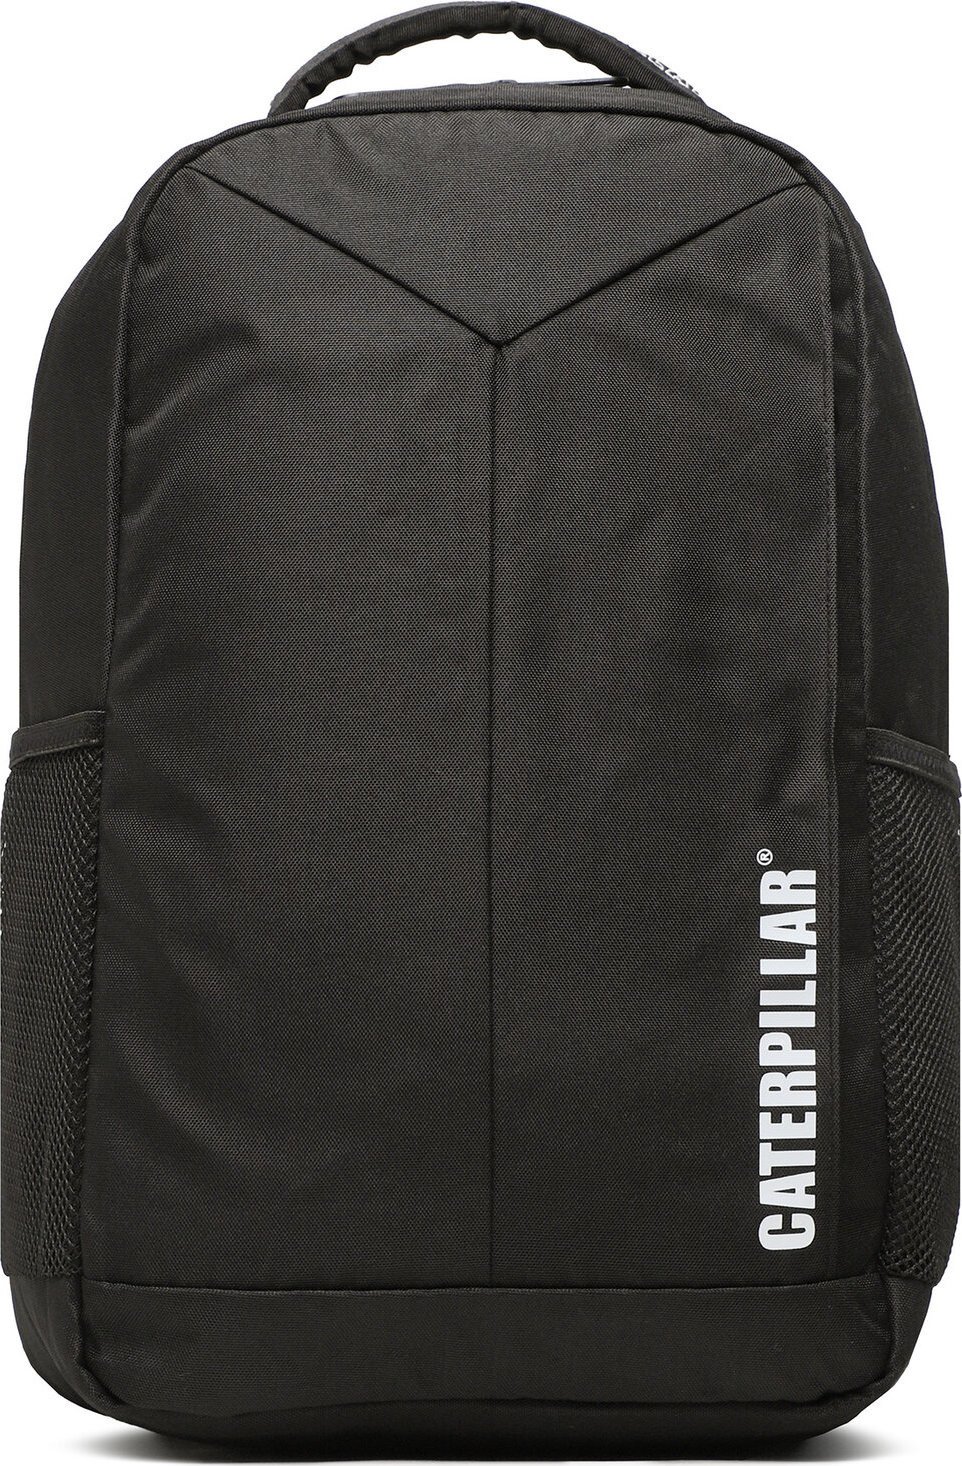 Batoh CATerpillar Backpack 84353-01 Black